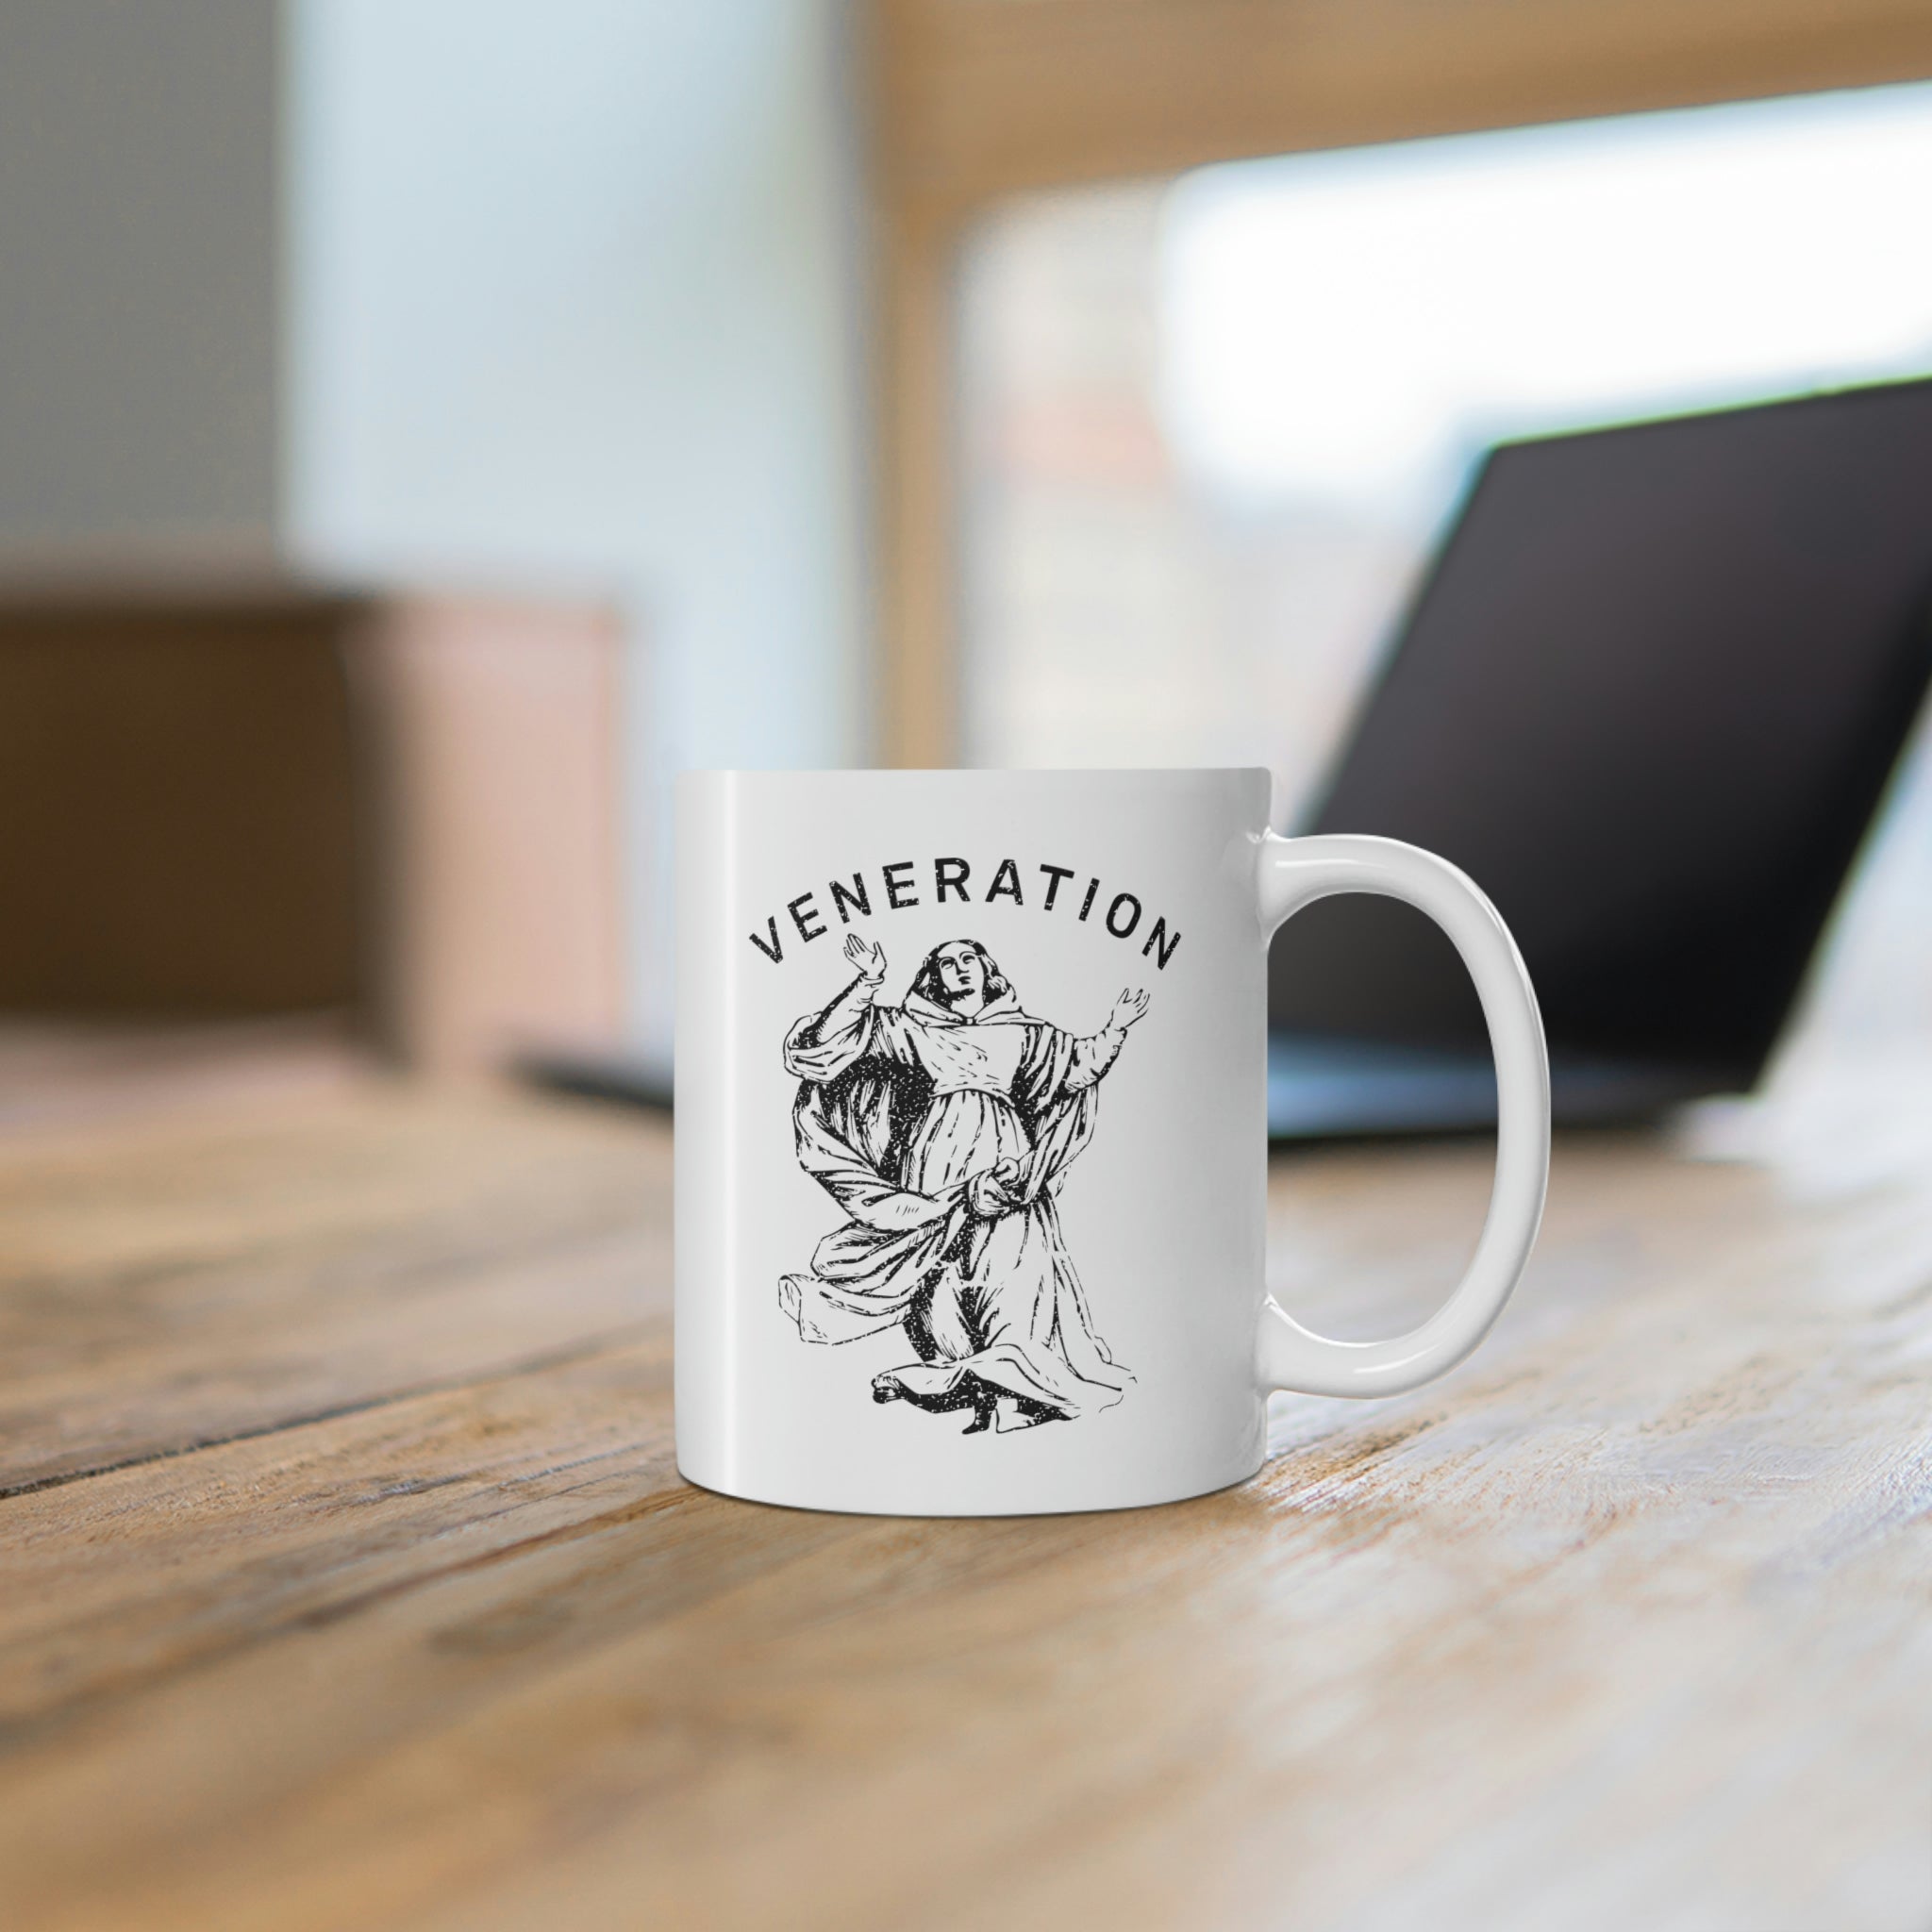 Veneration Coffee Mug